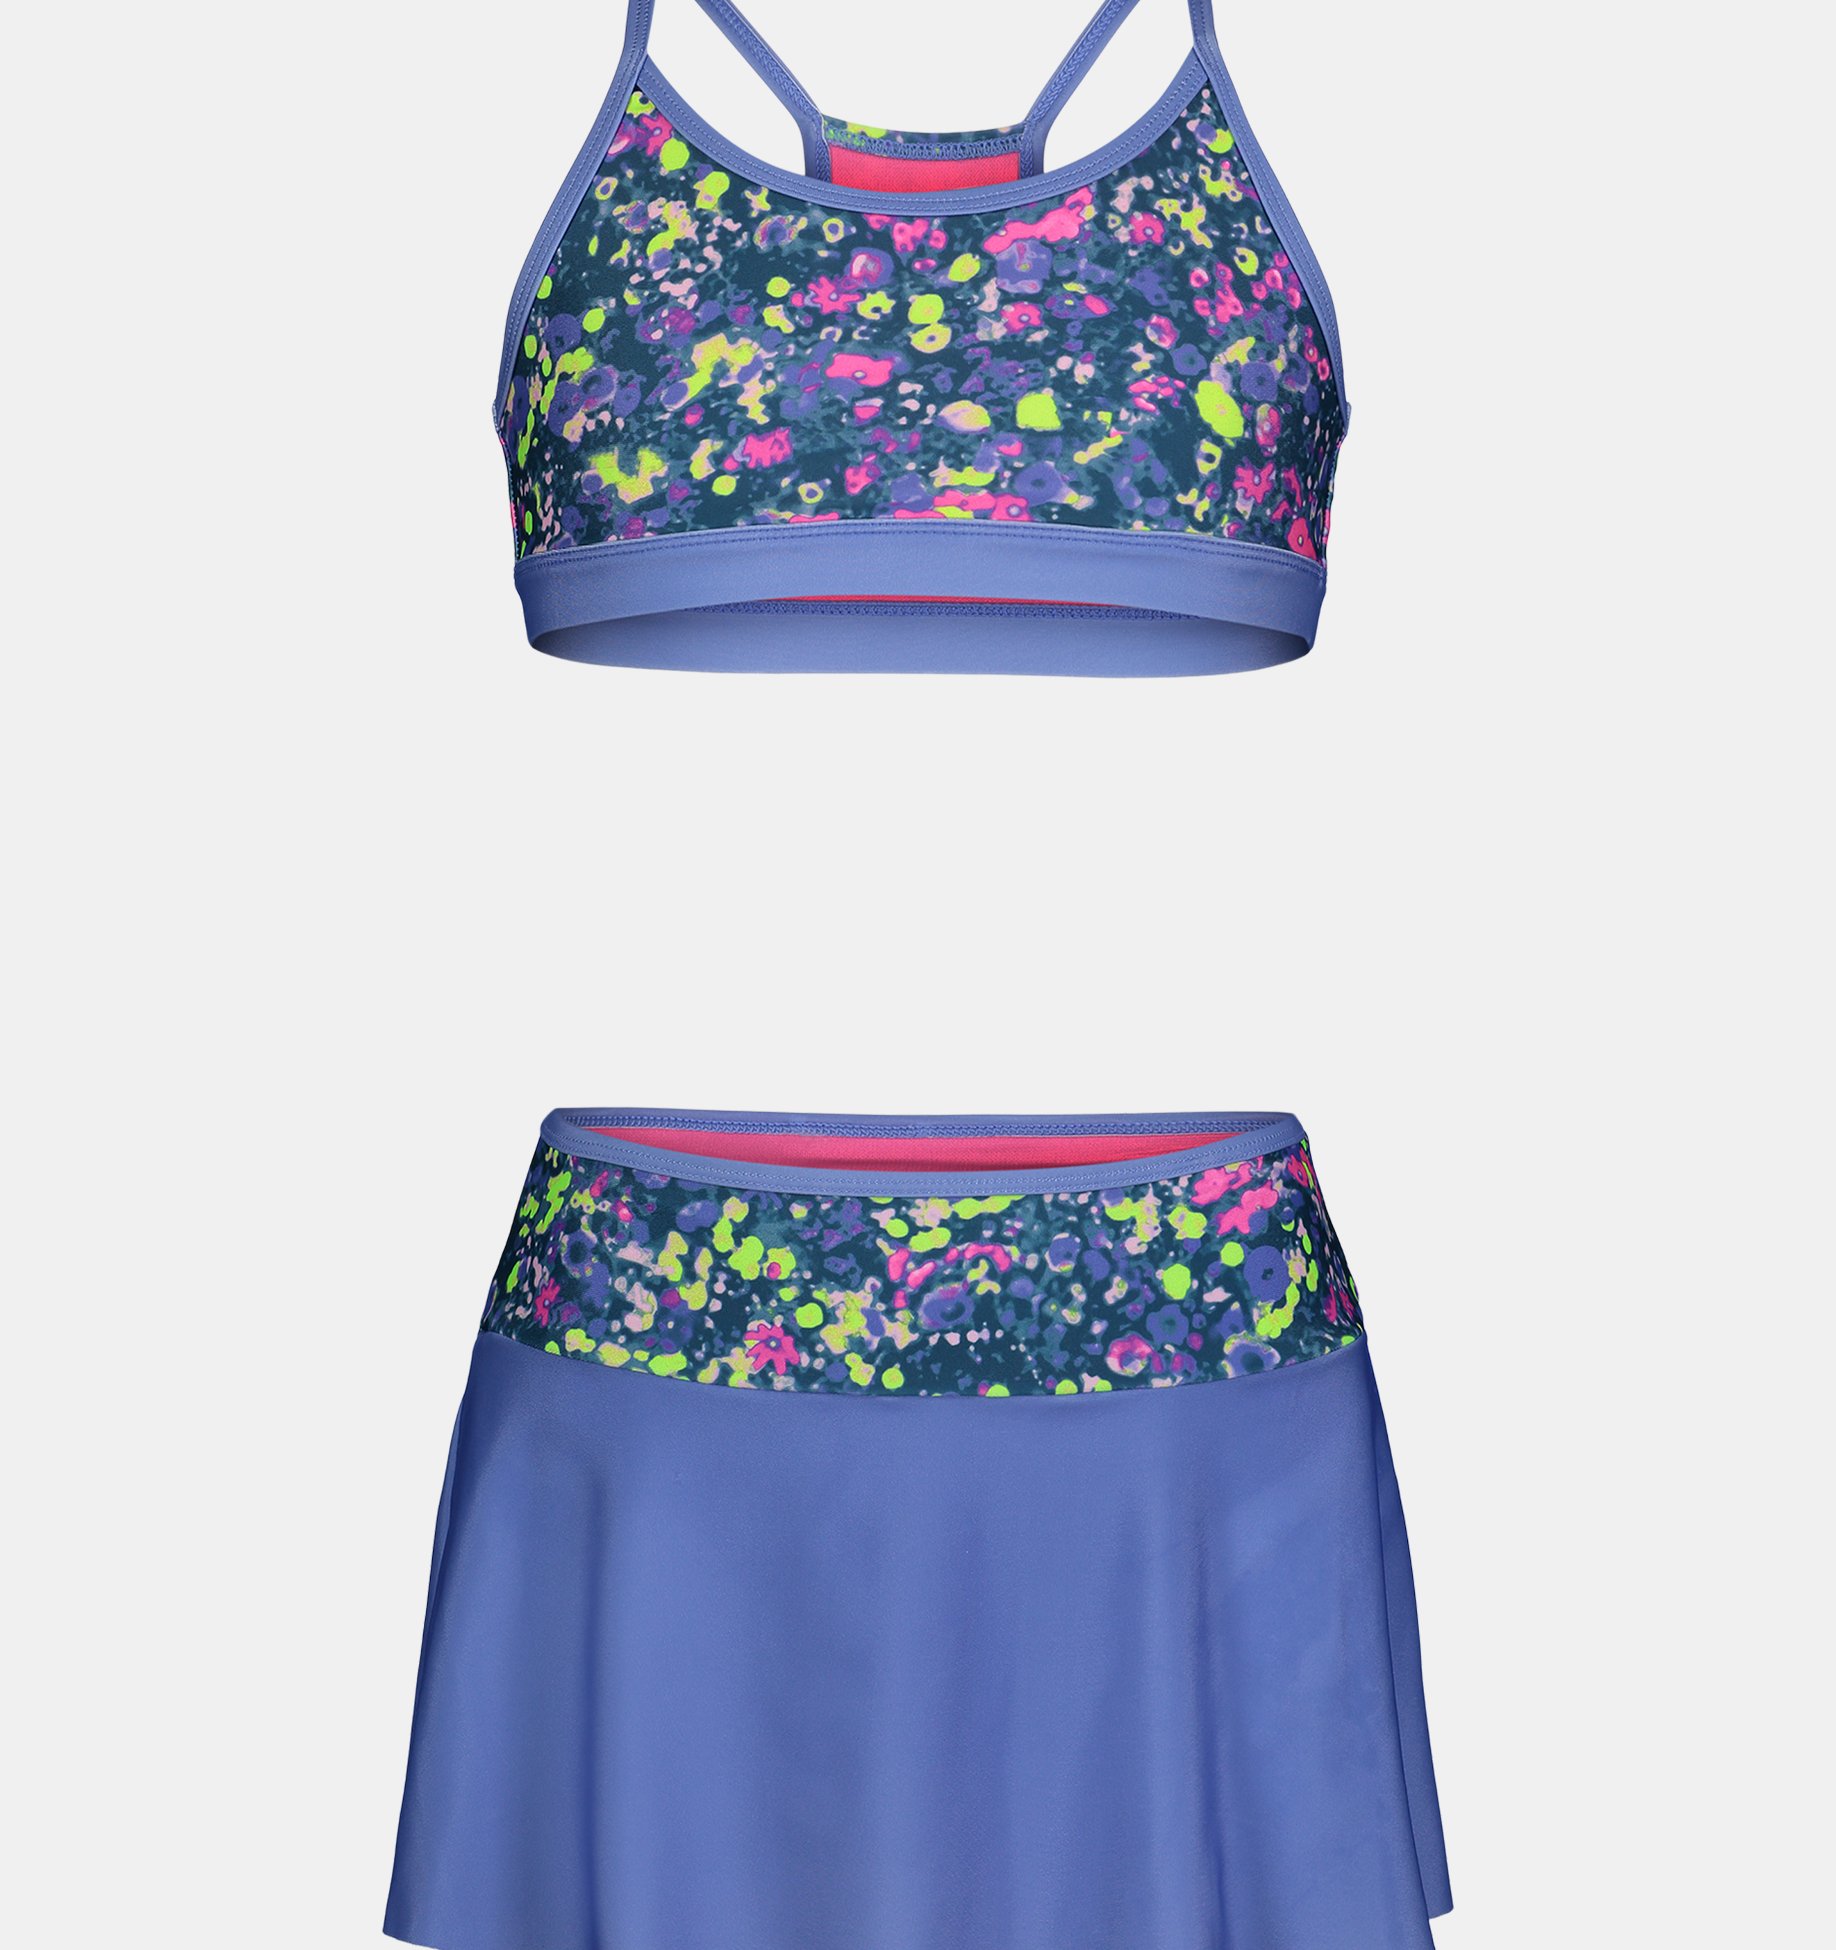 Toddler Girls' UA Two-Piece Swim Skirt Set